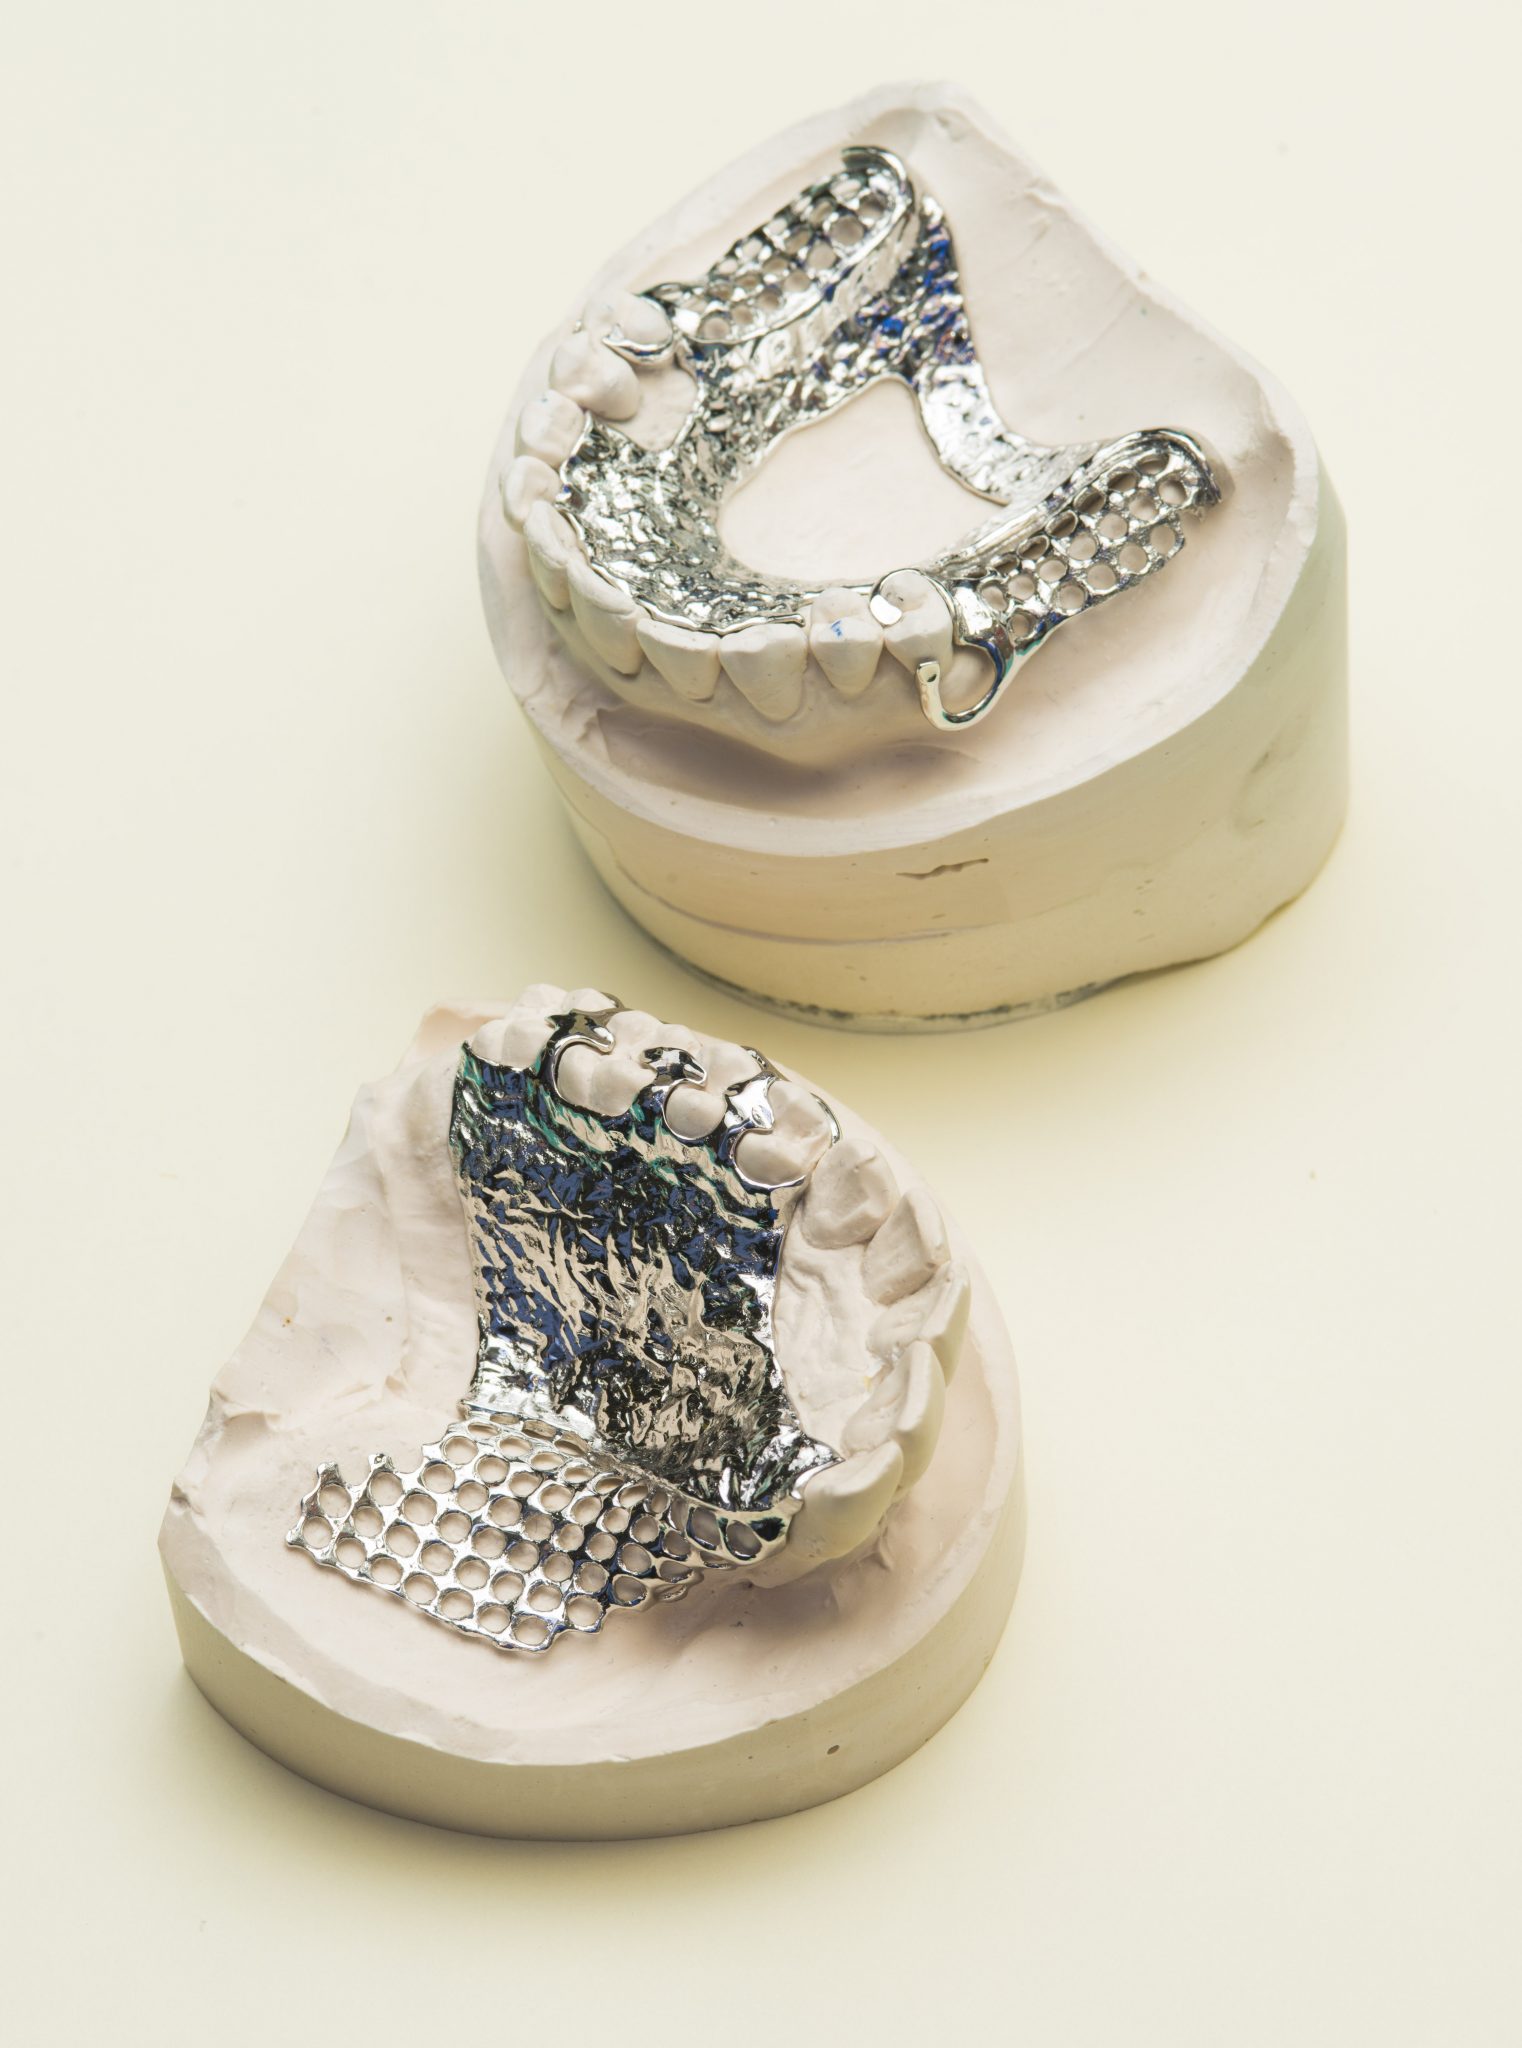 CoCr 3D printed removable partial dentures. Photo via Renishaw.